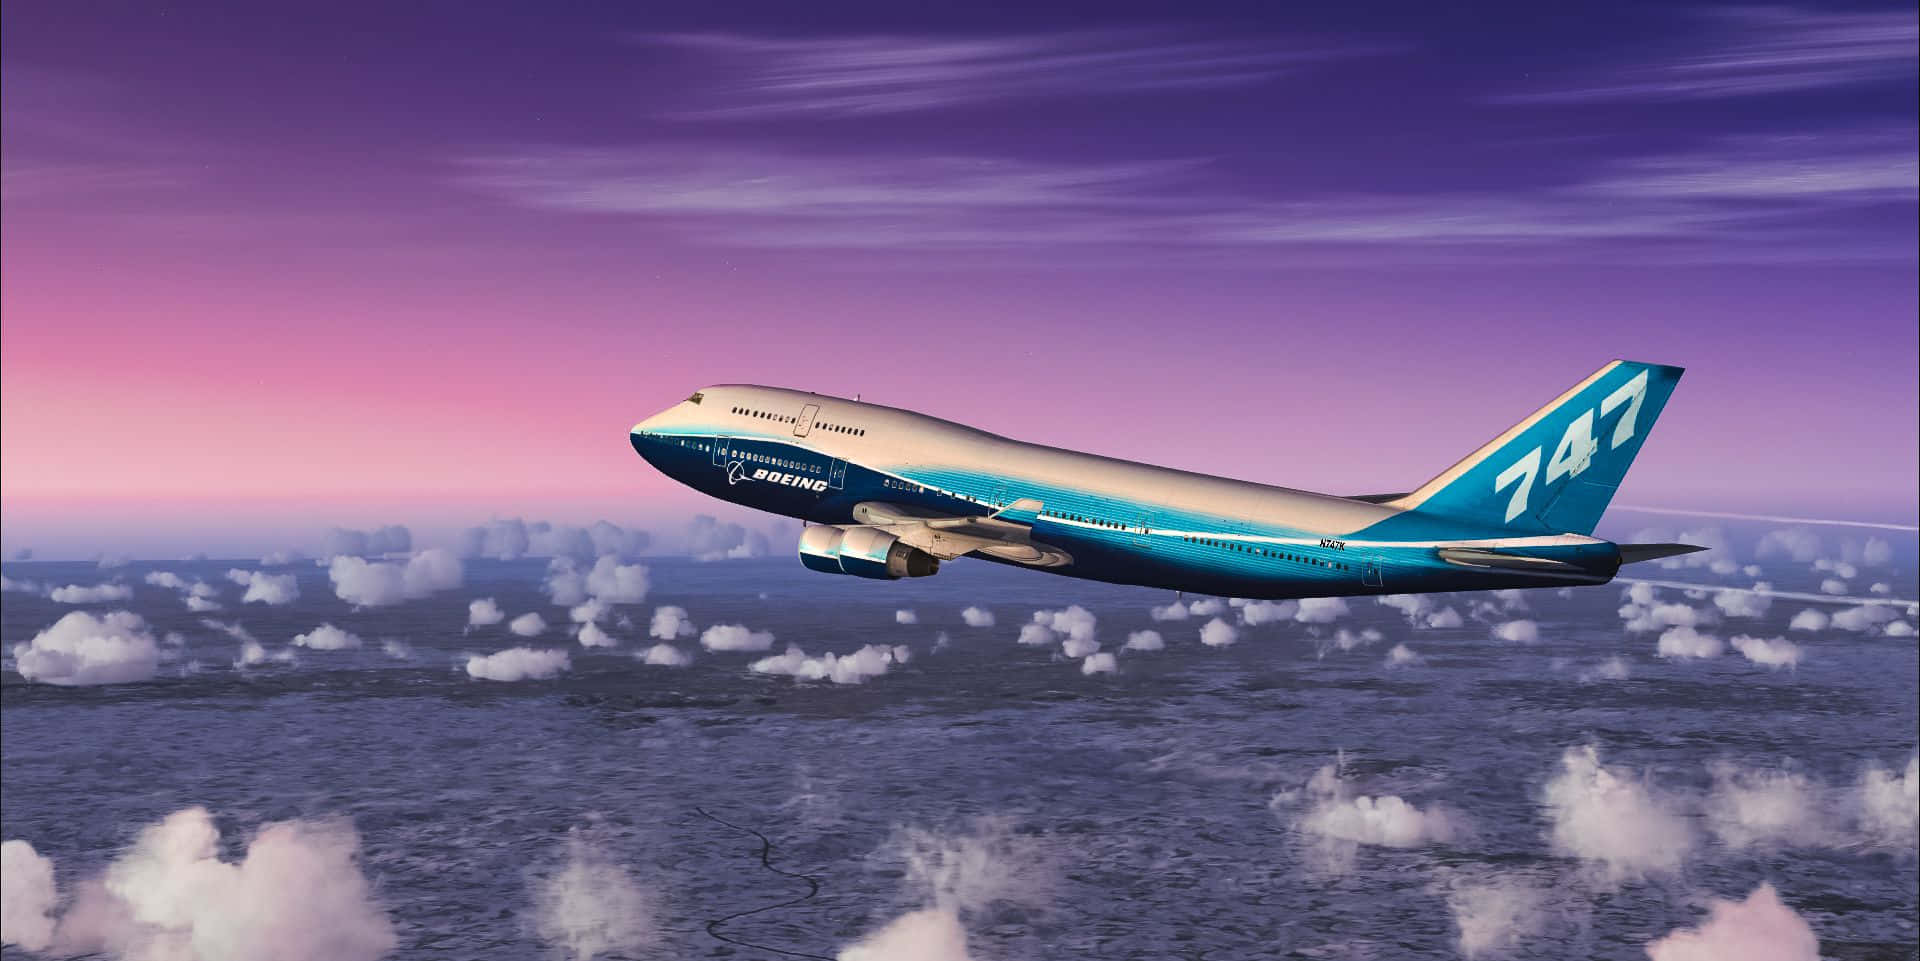 747 Airplane Over skies Wallpaper